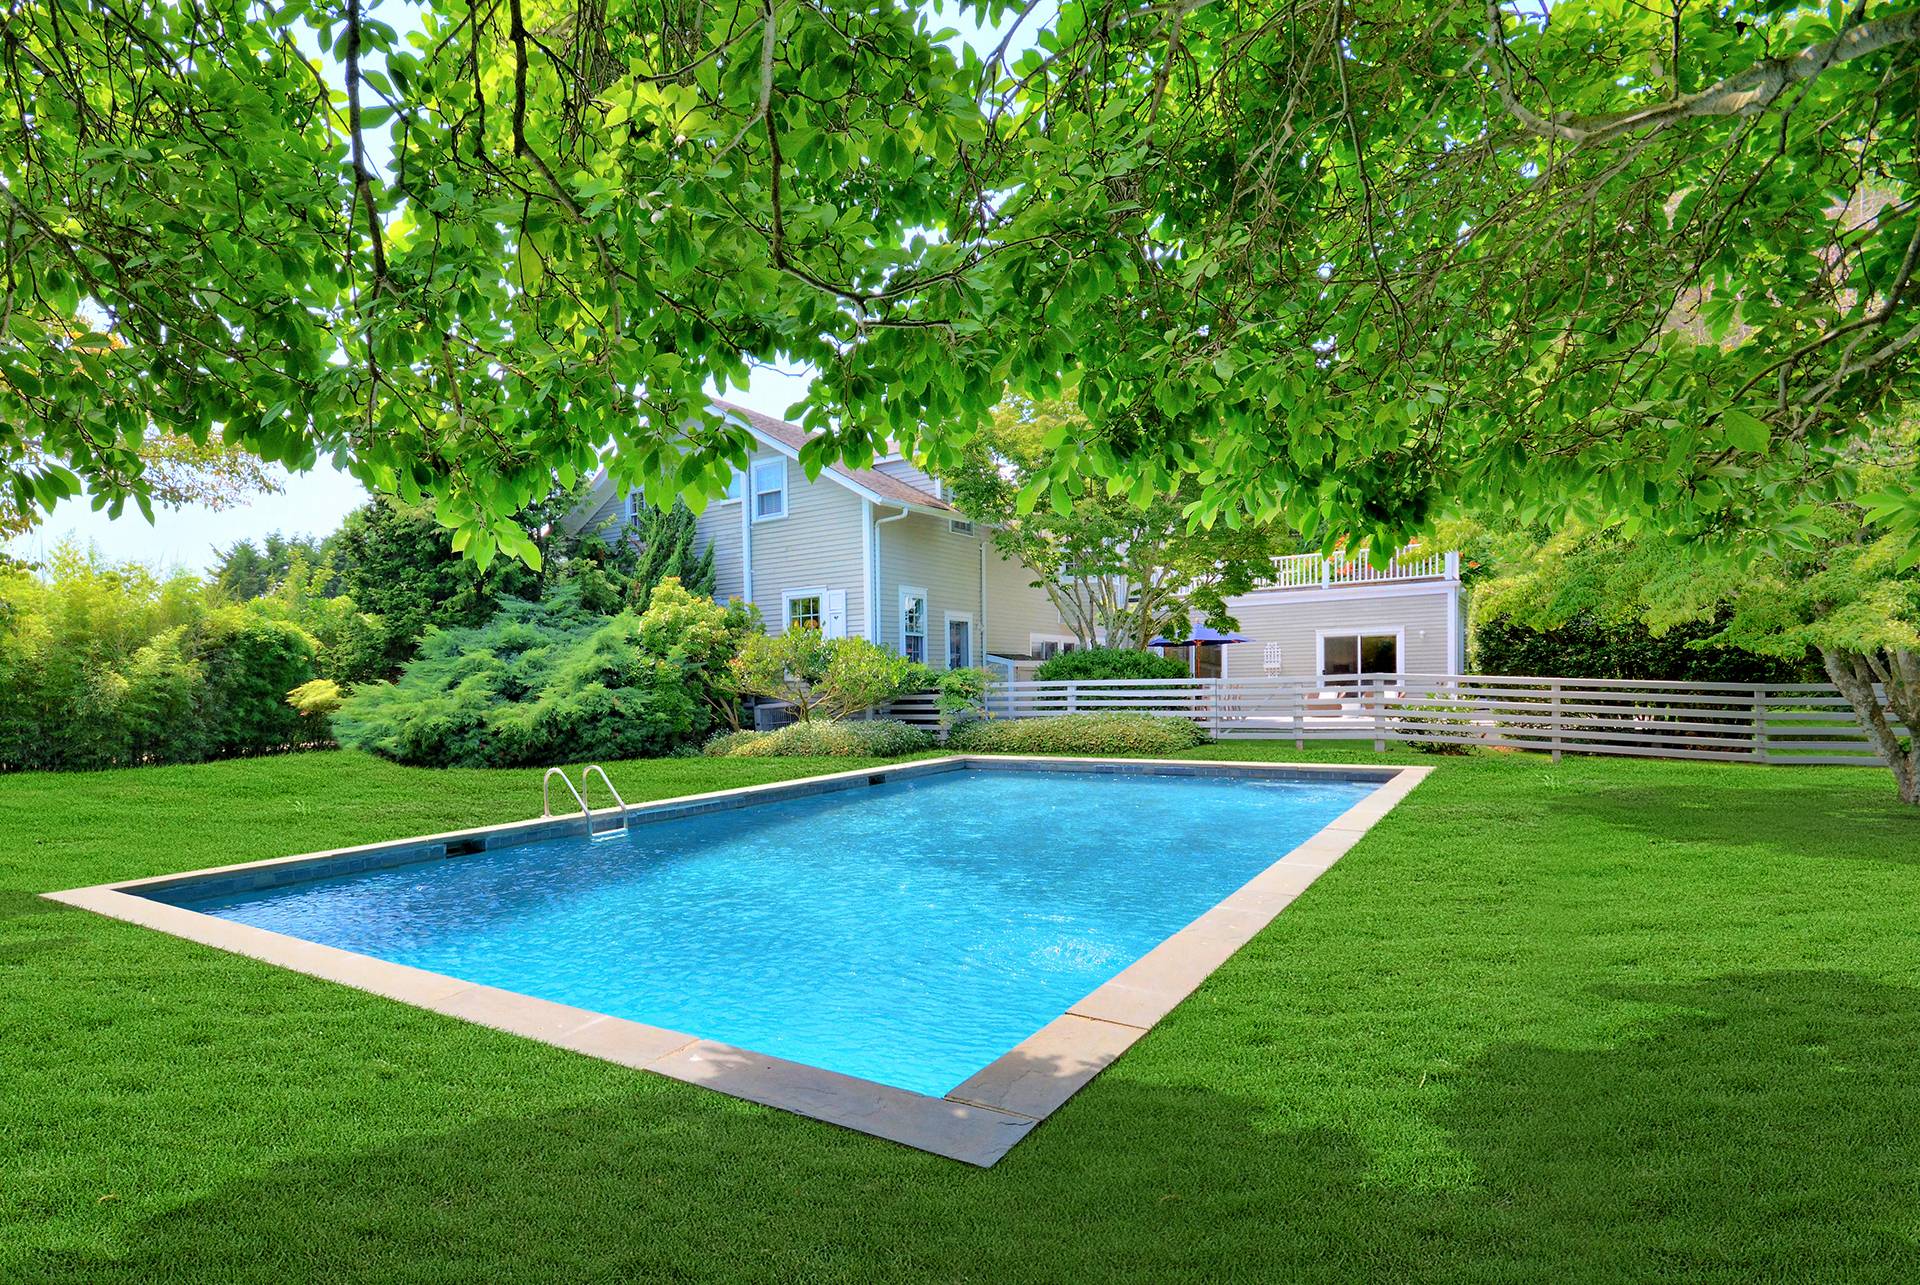 Rental Property at Village Of Southampton, Village Of Southampton, Hamptons, NY - Bedrooms: 5 
Bathrooms: 5.5  - $75,000 MO.